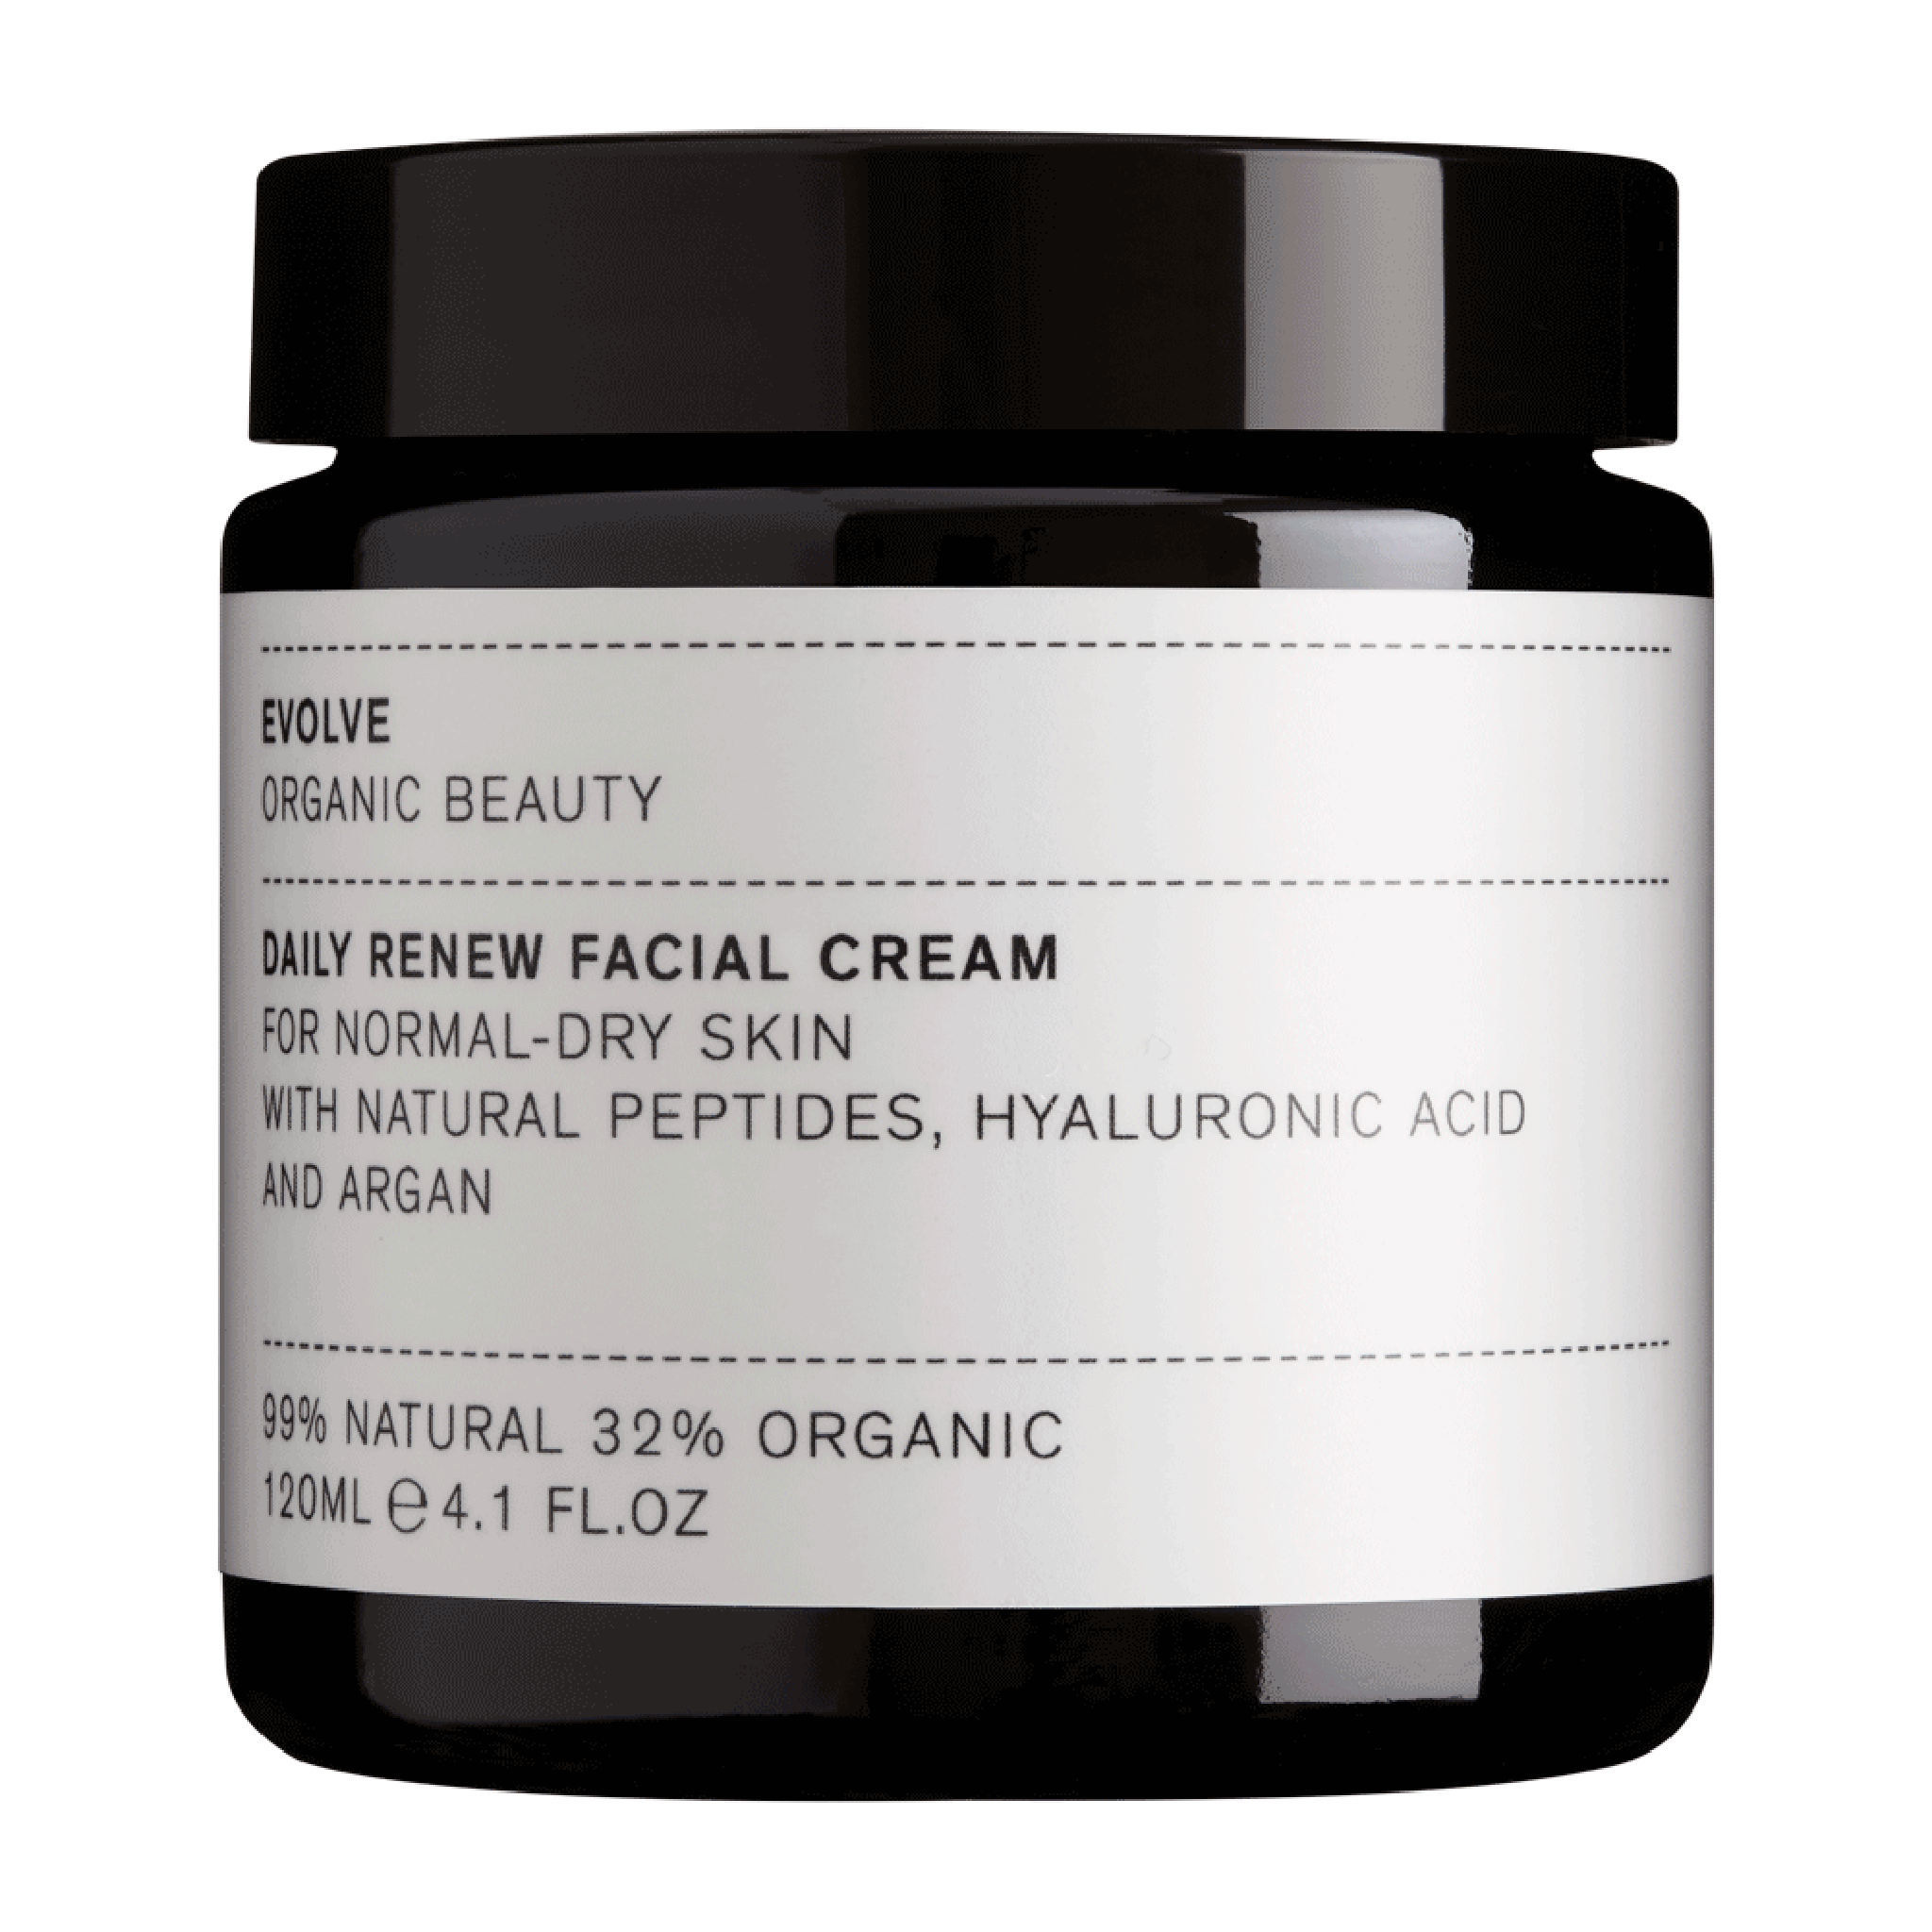 -Daily Renew Facial Cream